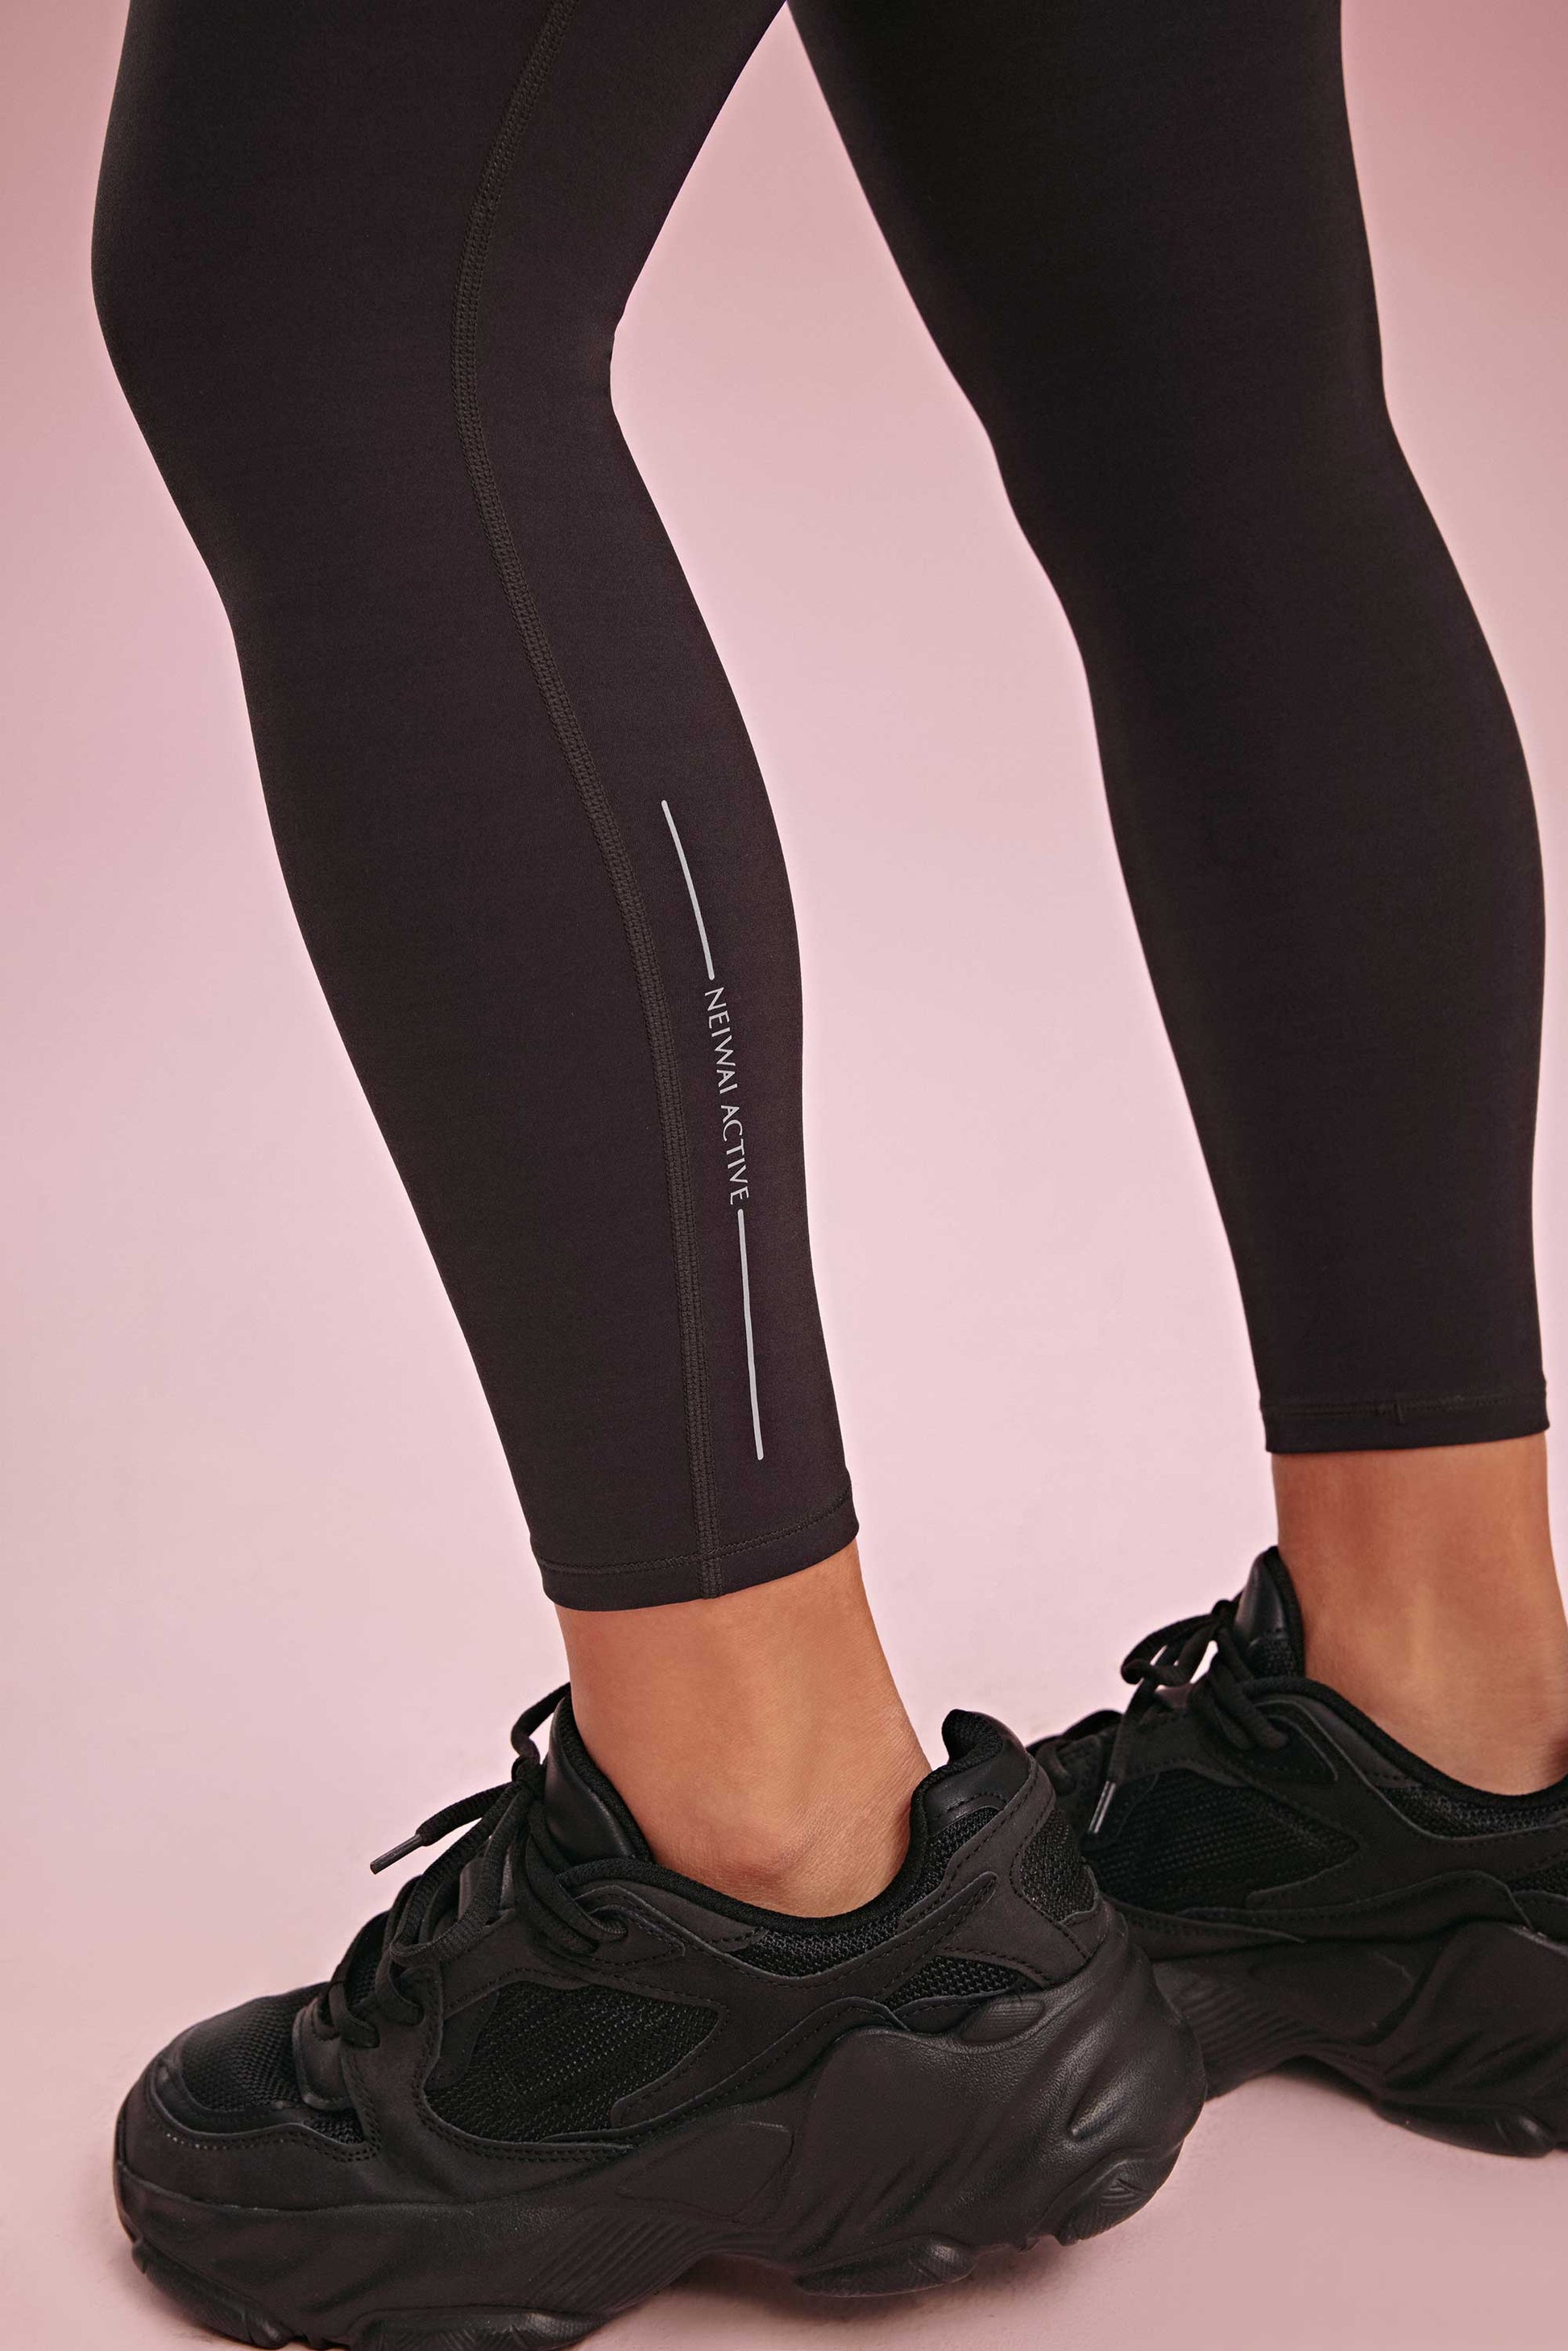 ankle detail of the black leggings shown neiwai active logo, she wears a black sneaker